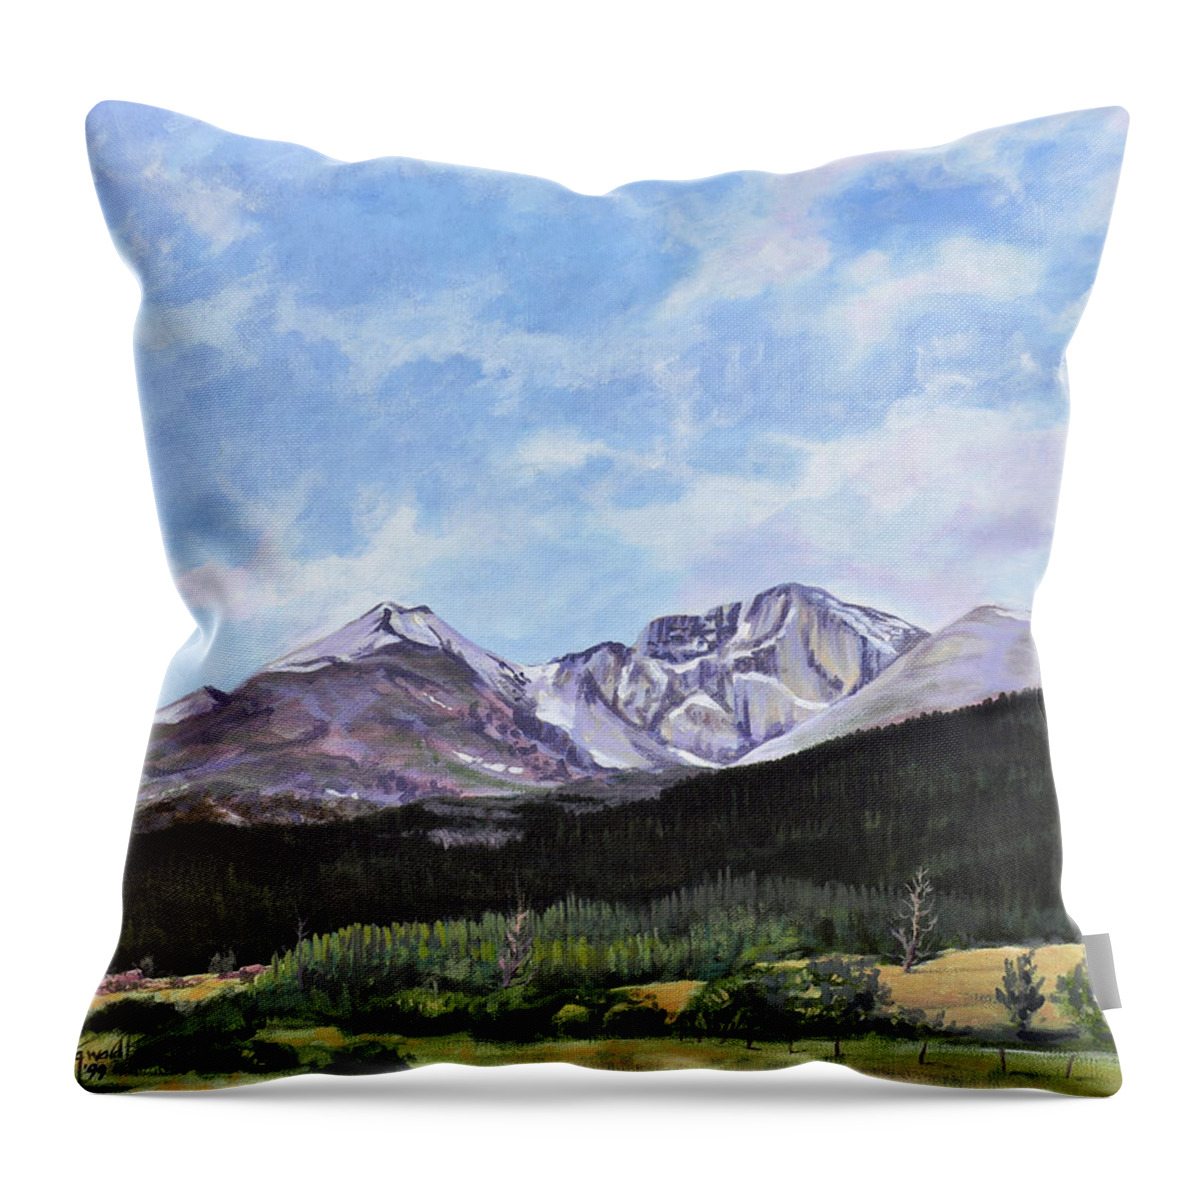 Longs Peak Throw Pillow featuring the painting Longs Peak Vista by Craig Burgwardt